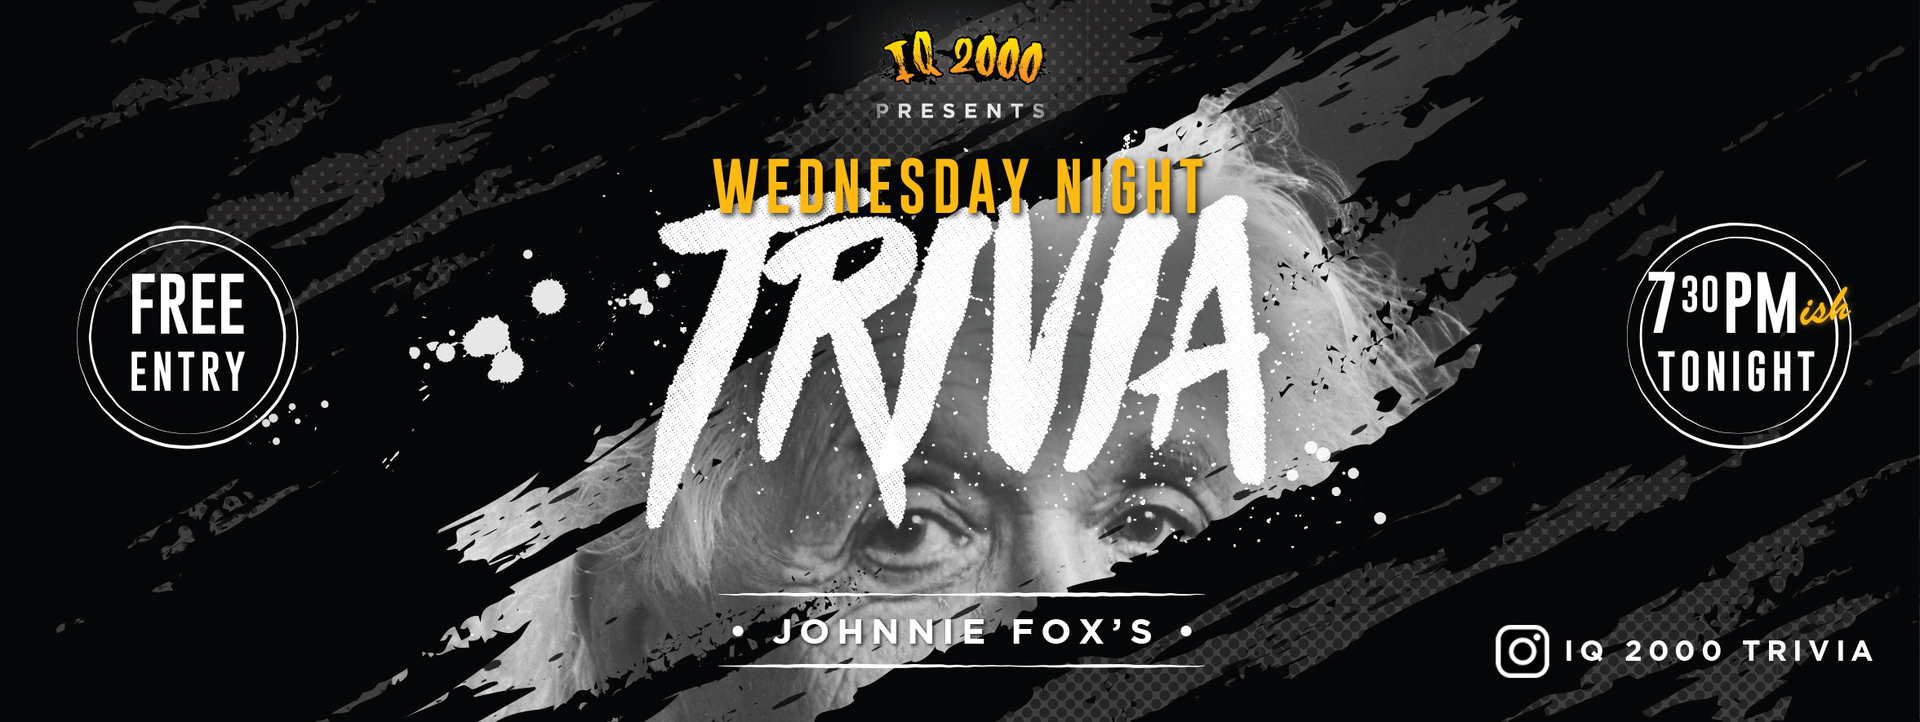 Wednesday Night Trivia at Johnnie Fox's, Vancouver, British Columbia, Canada